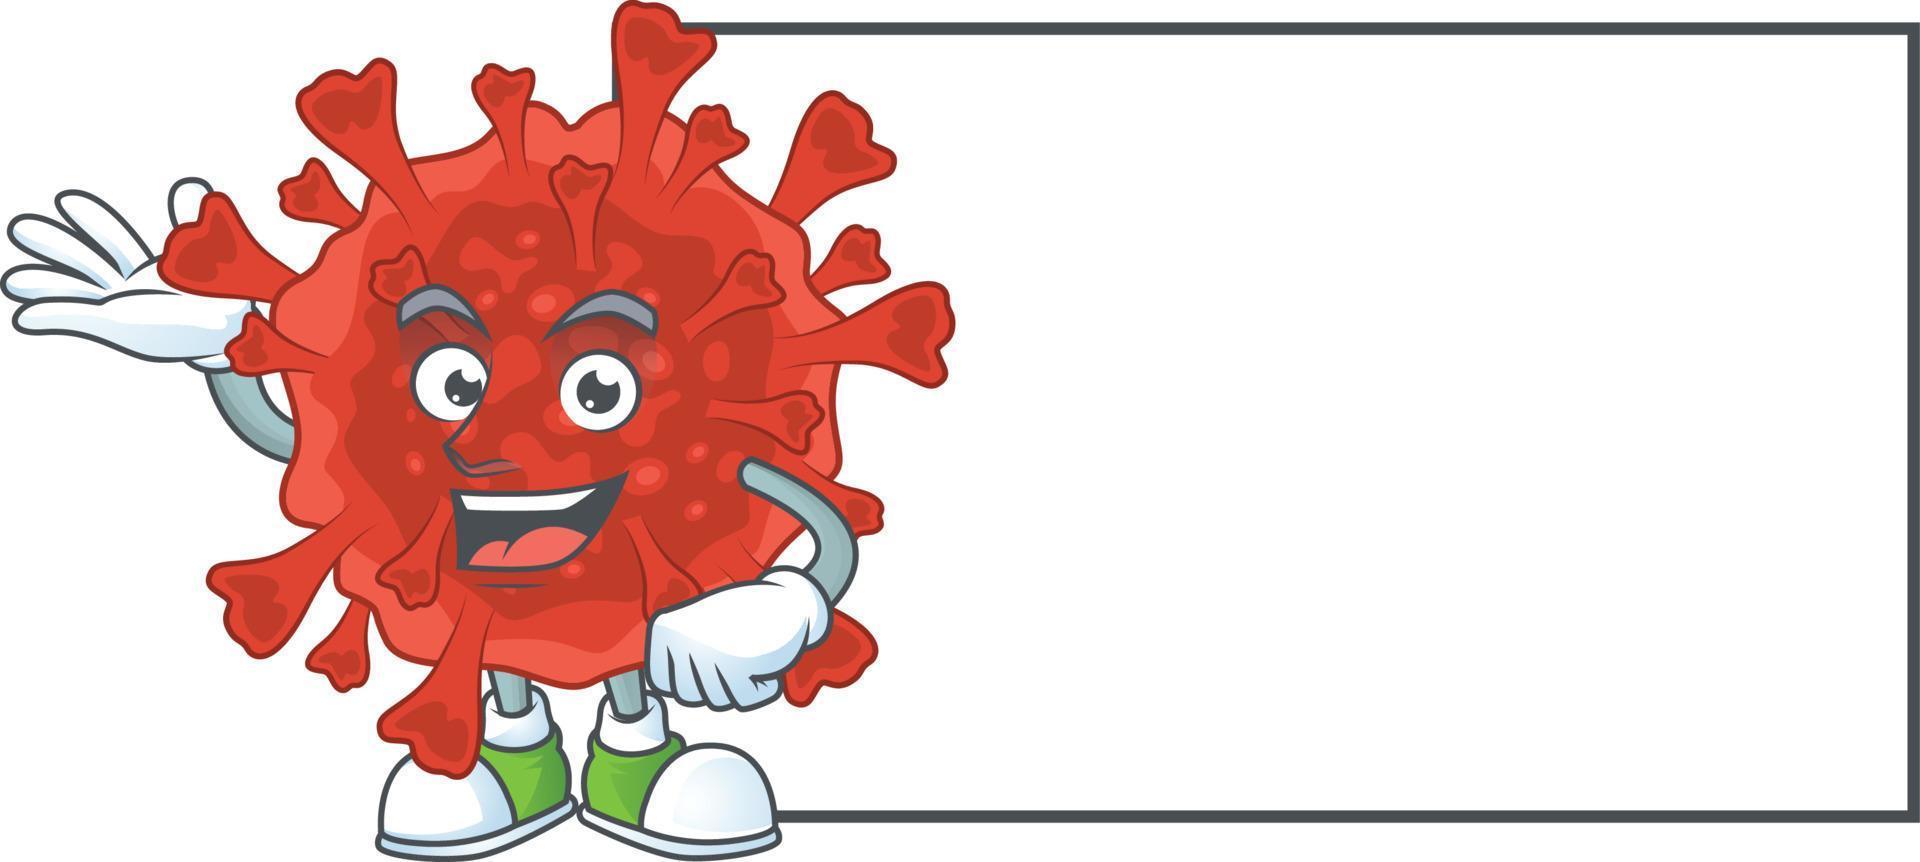 ein Karikatur Charakter von rot Corona Virus vektor